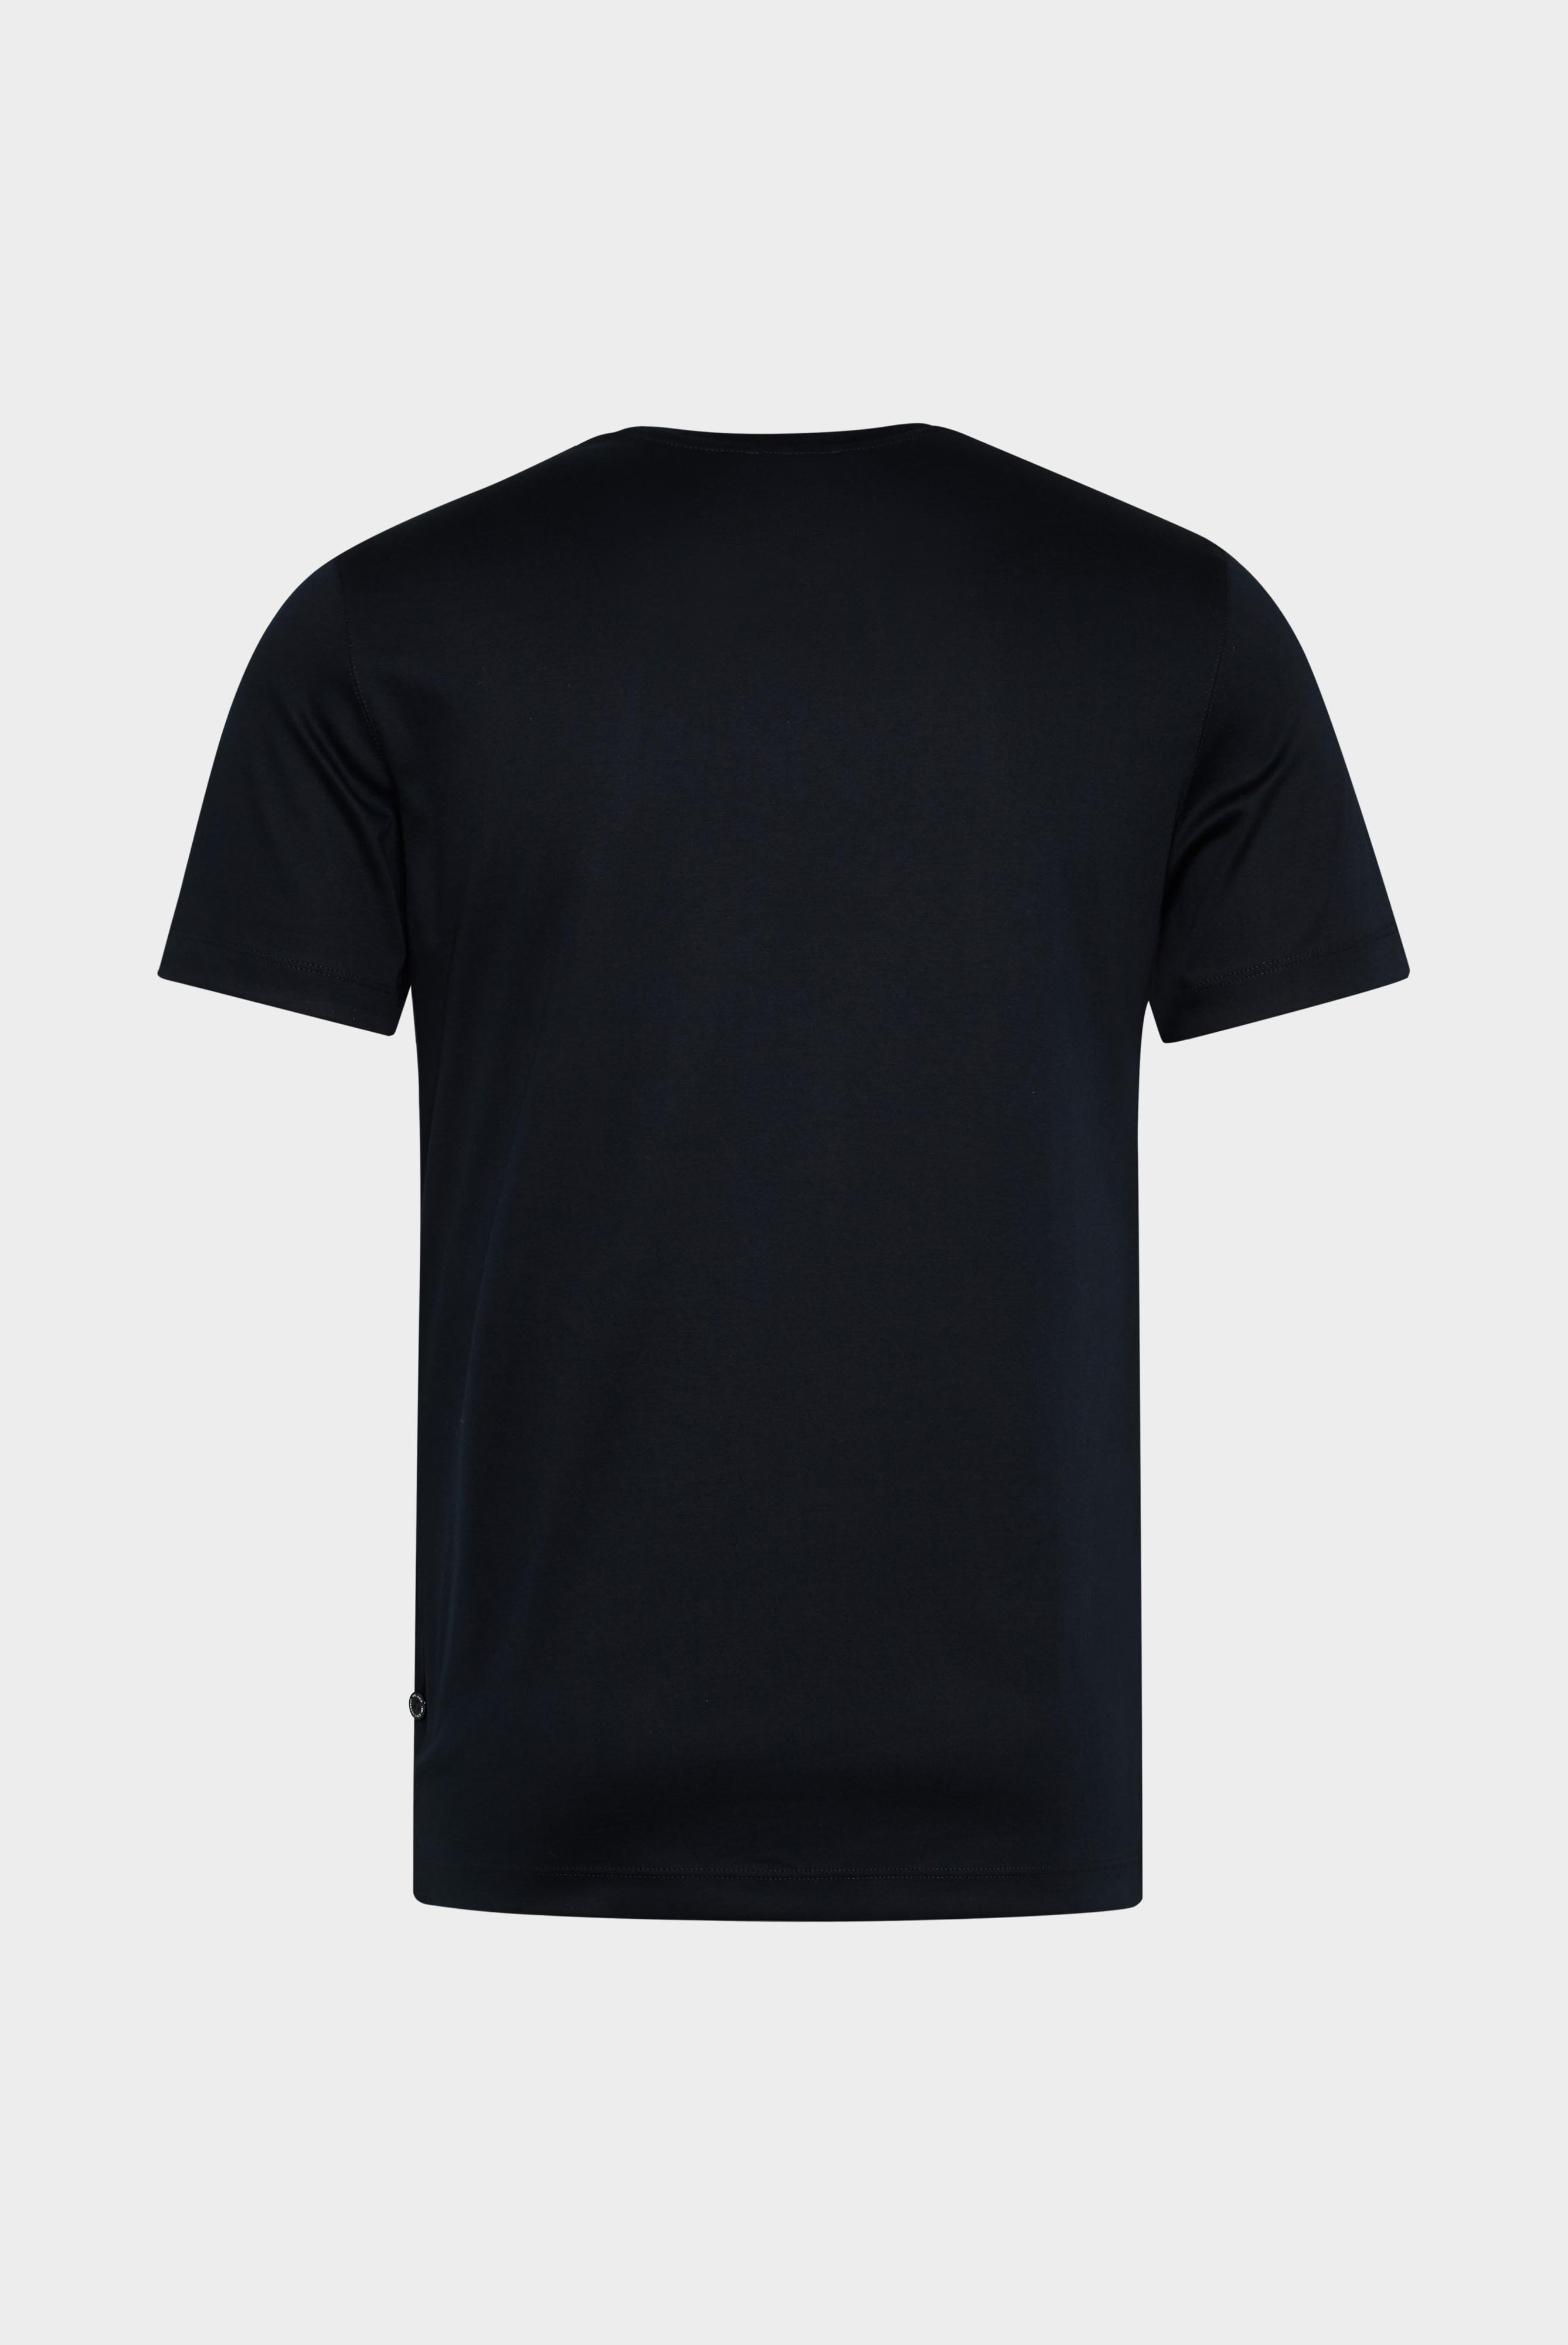 T-Shirts+Plain Luxurious Swiss Cotton Jersey V-Neck T-Shirt+20.1715.UX.180031.790.XS